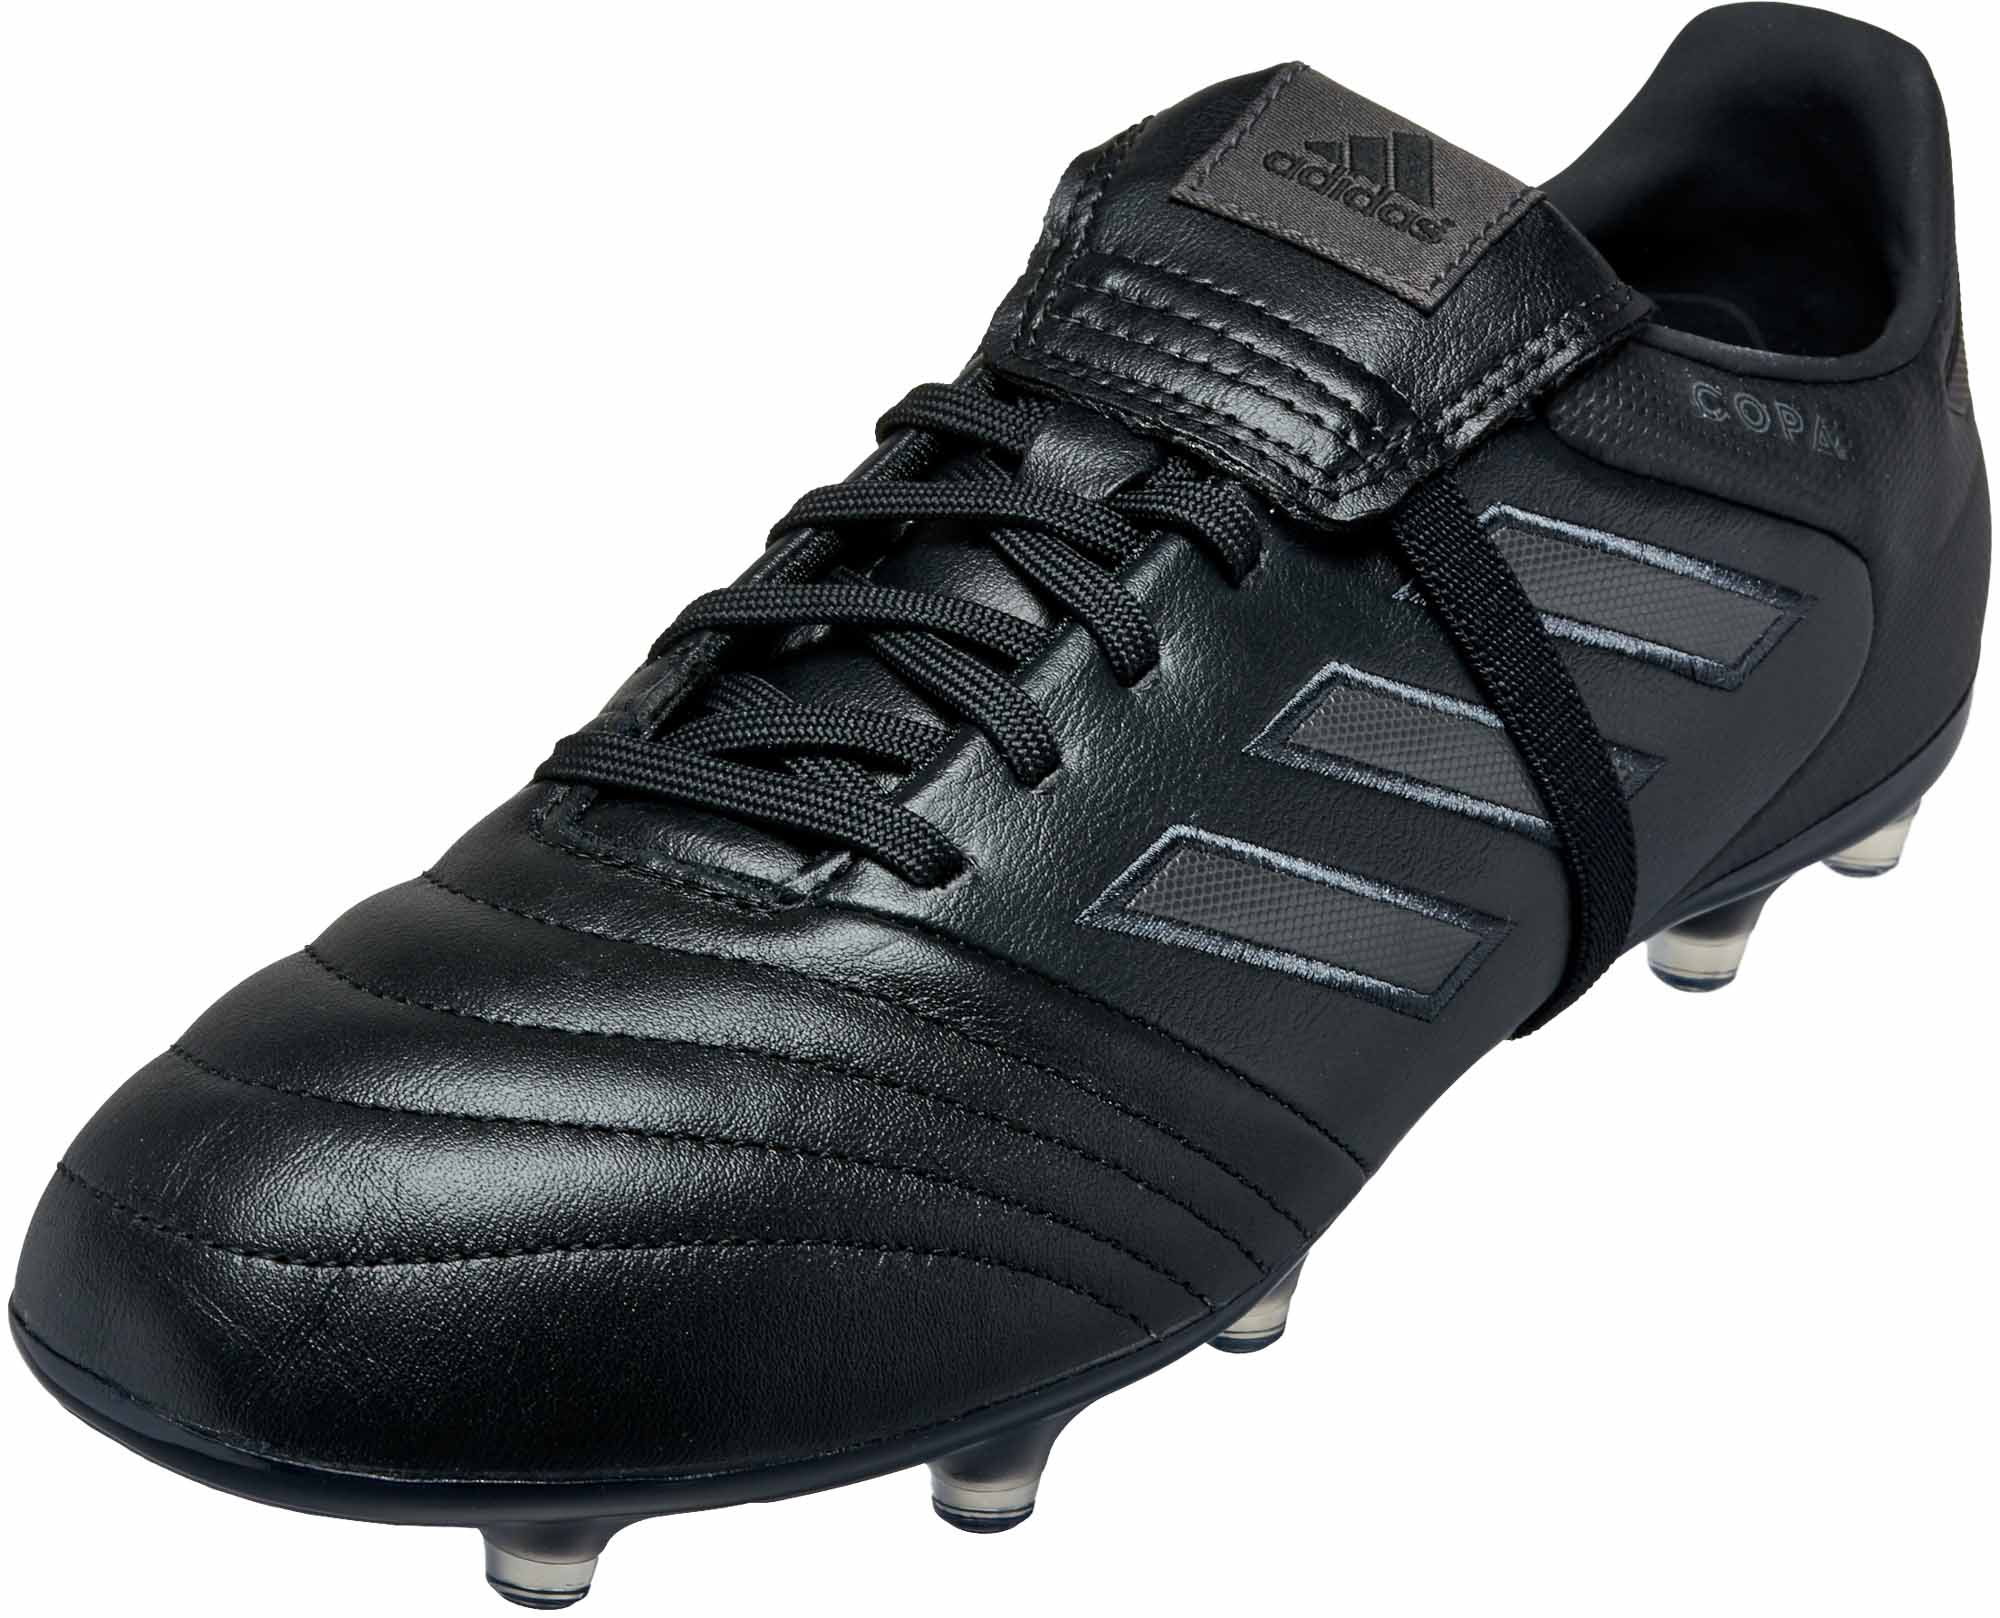 adidas Gloro 17.2 - Black adidas Soccer Cleats